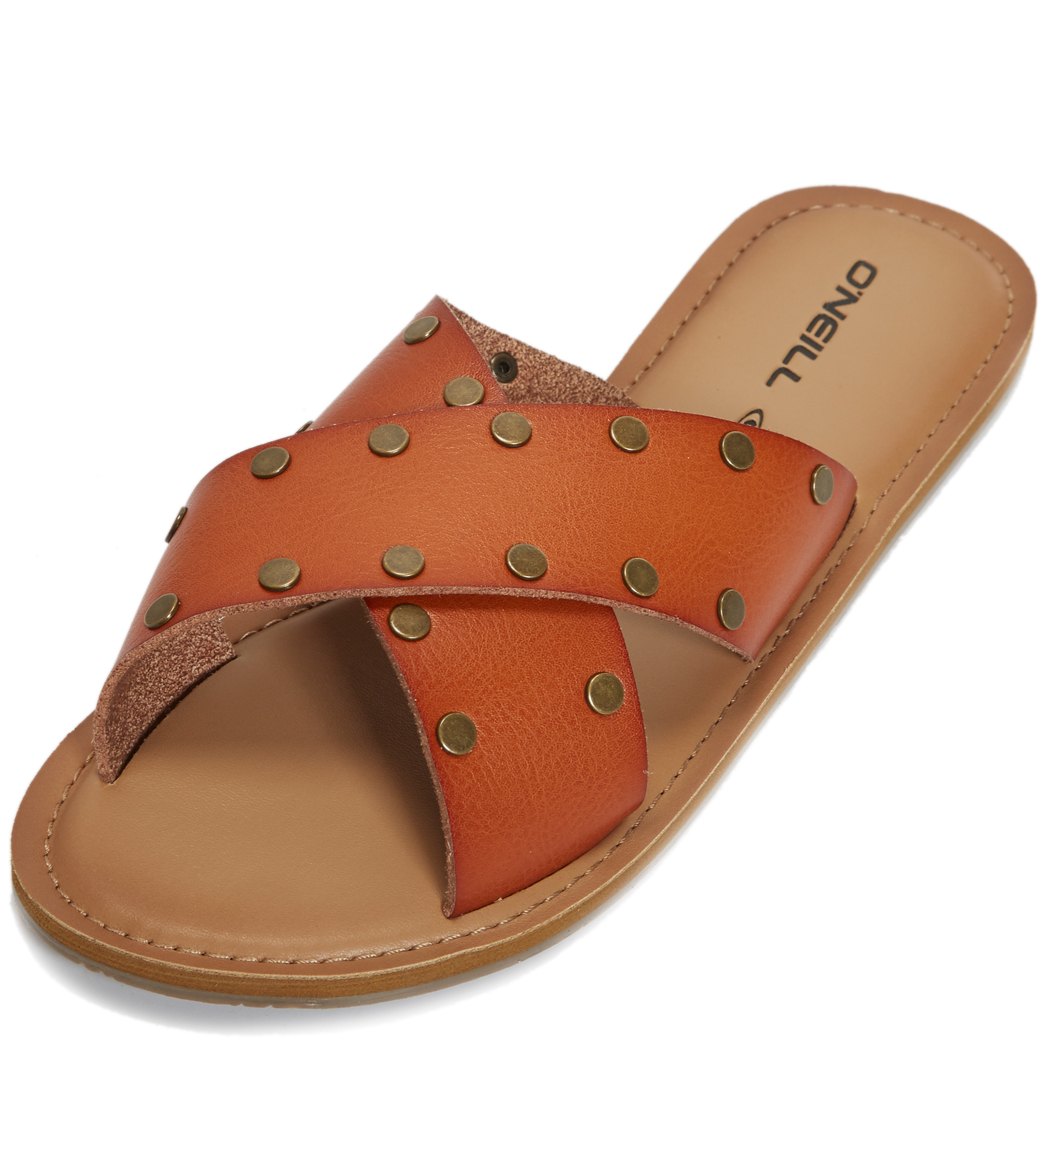 O'neill Southy Slides Sandals - Cognac 7 - Swimoutlet.com